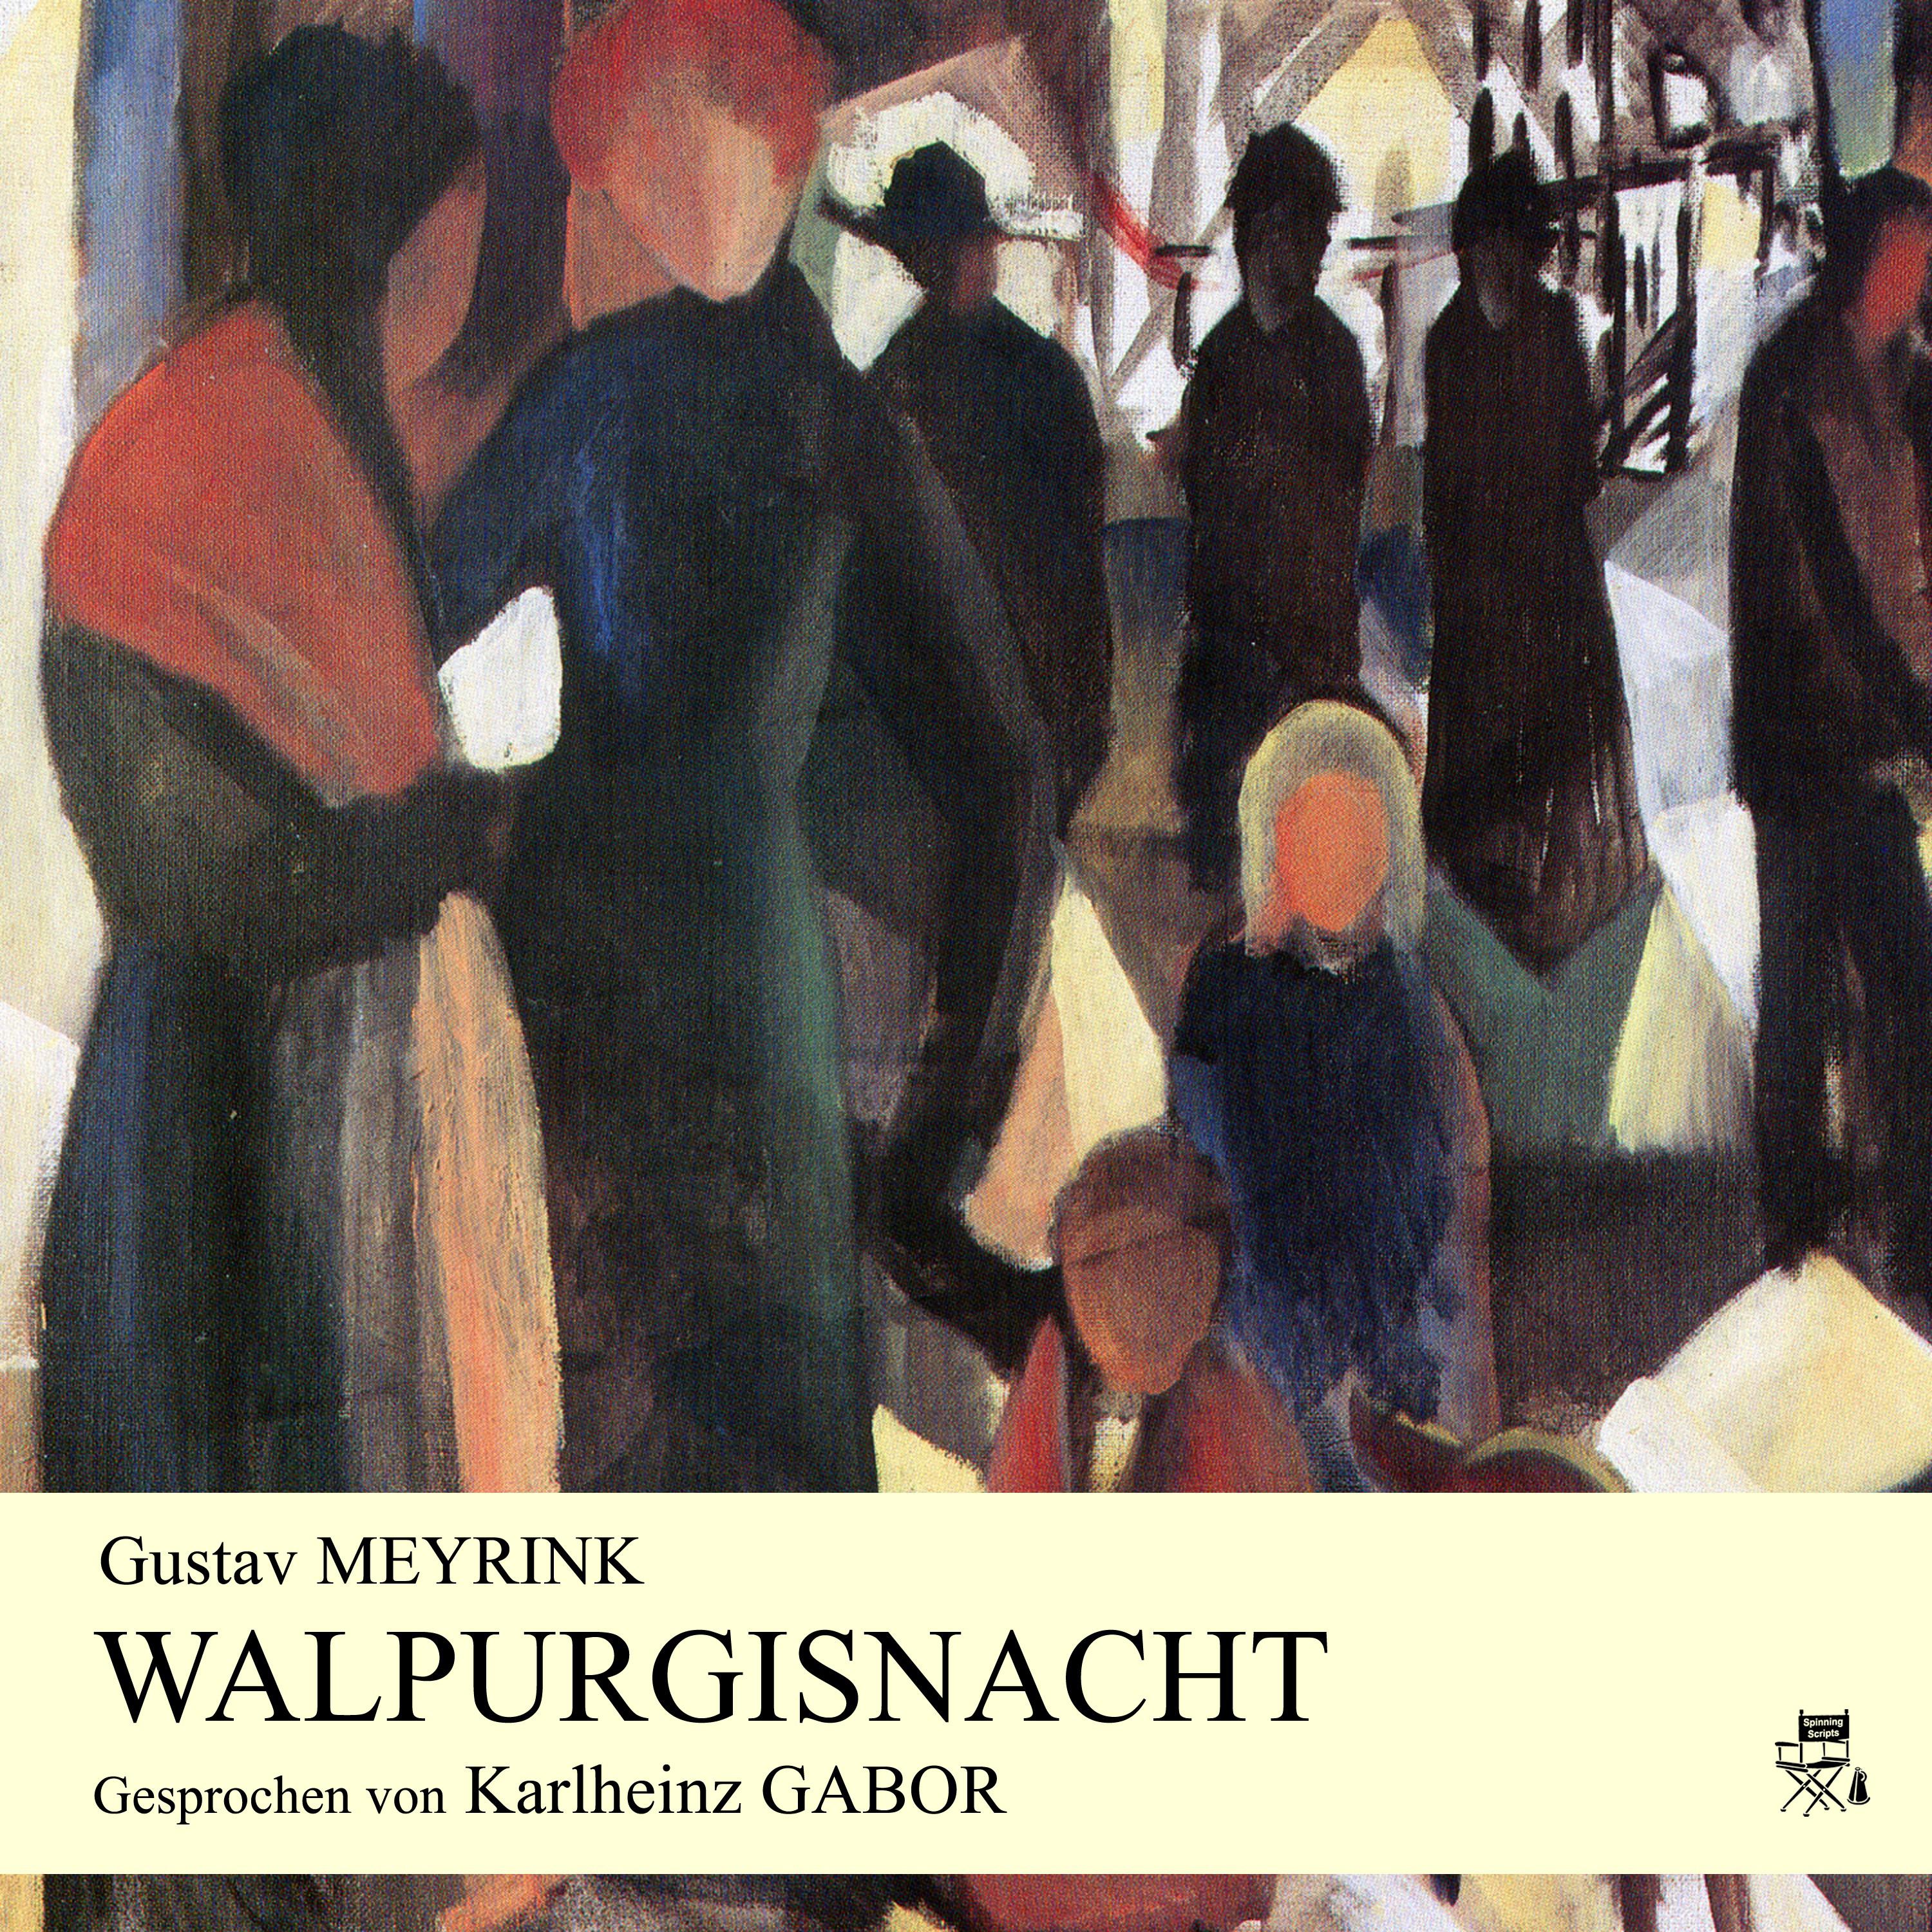 Kapitel 1: Walpurgisnacht (Teil 24)